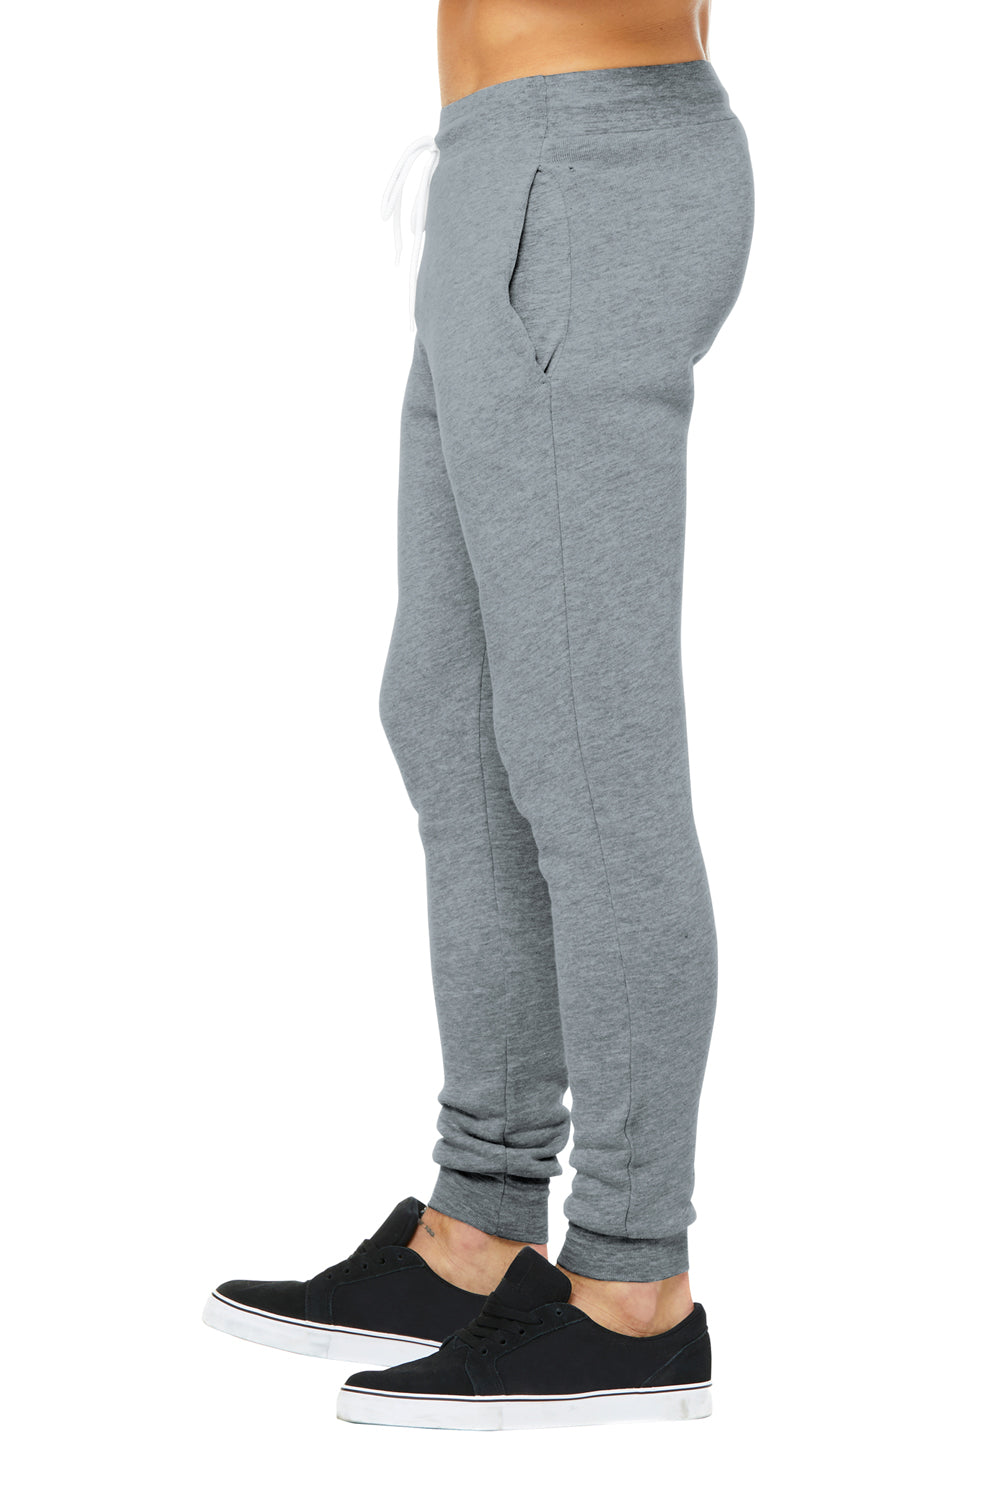 Bella + Canvas BC3727 Mens Jogger Sweatpants w/ Pockets Heather Grey Model Side